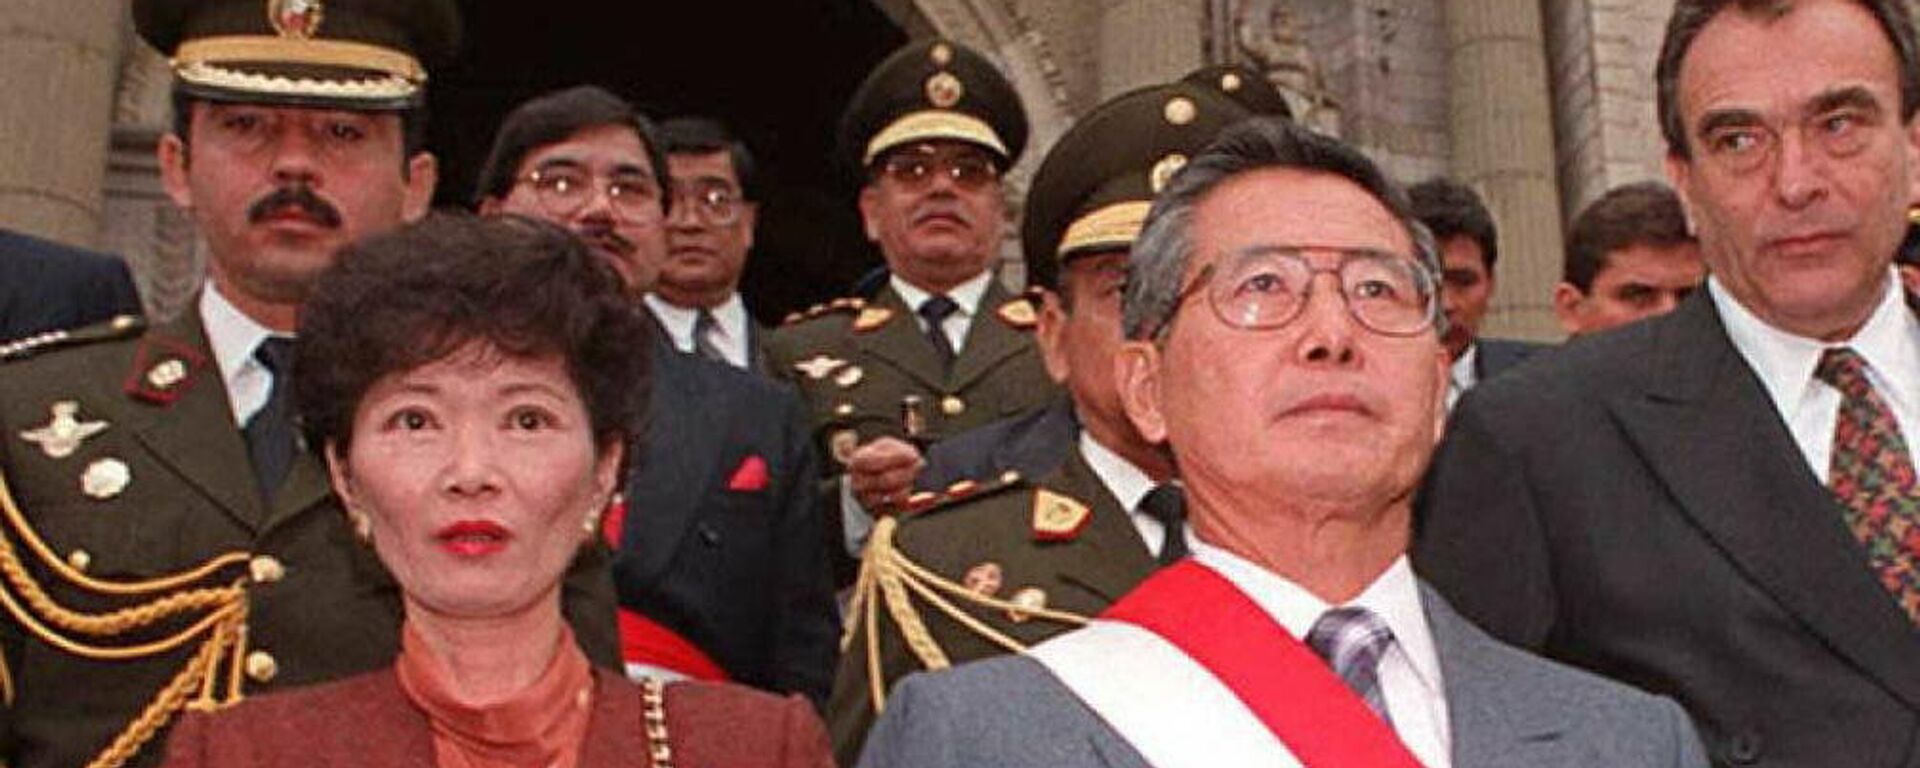 El expresidente peruano Alberto Fujimori y su exesposa, Susana Higuchi  - Sputnik Mundo, 1920, 09.11.2021